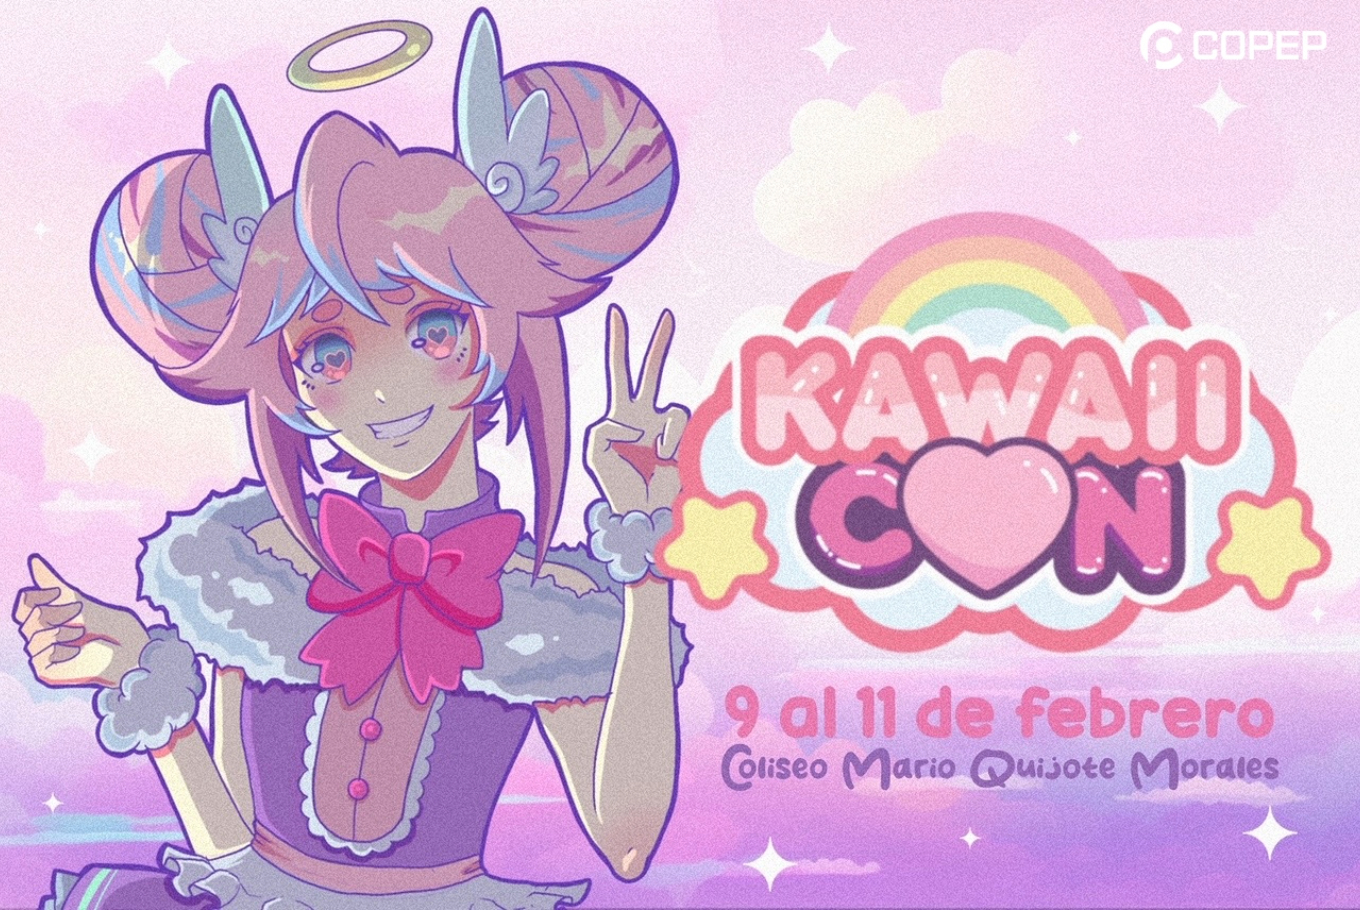 Kawaii Con PR: Valentine’s edition